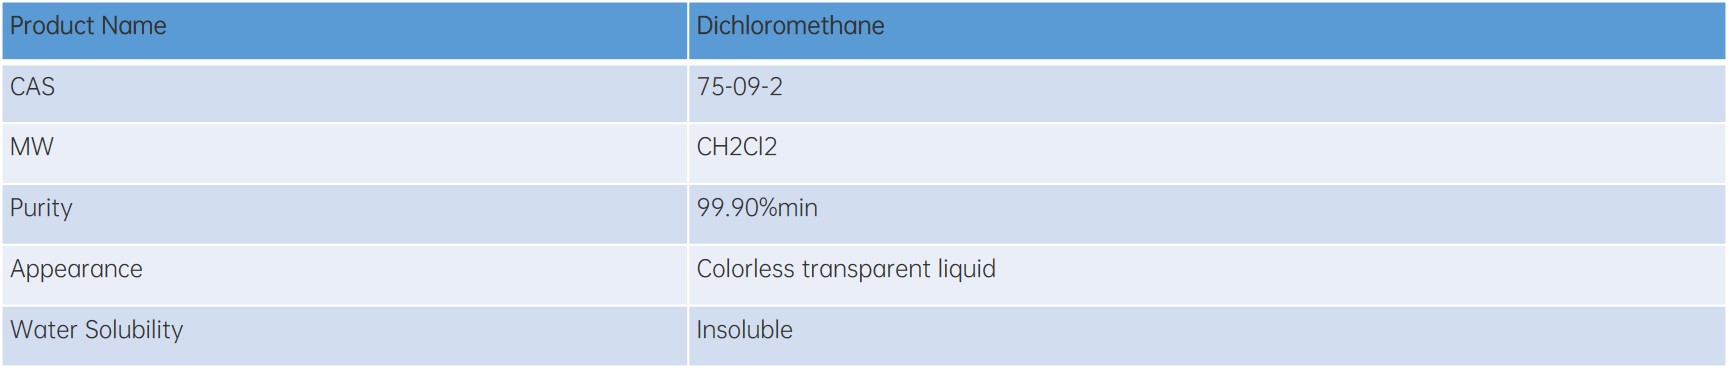 Dichloromethane (DCM) 